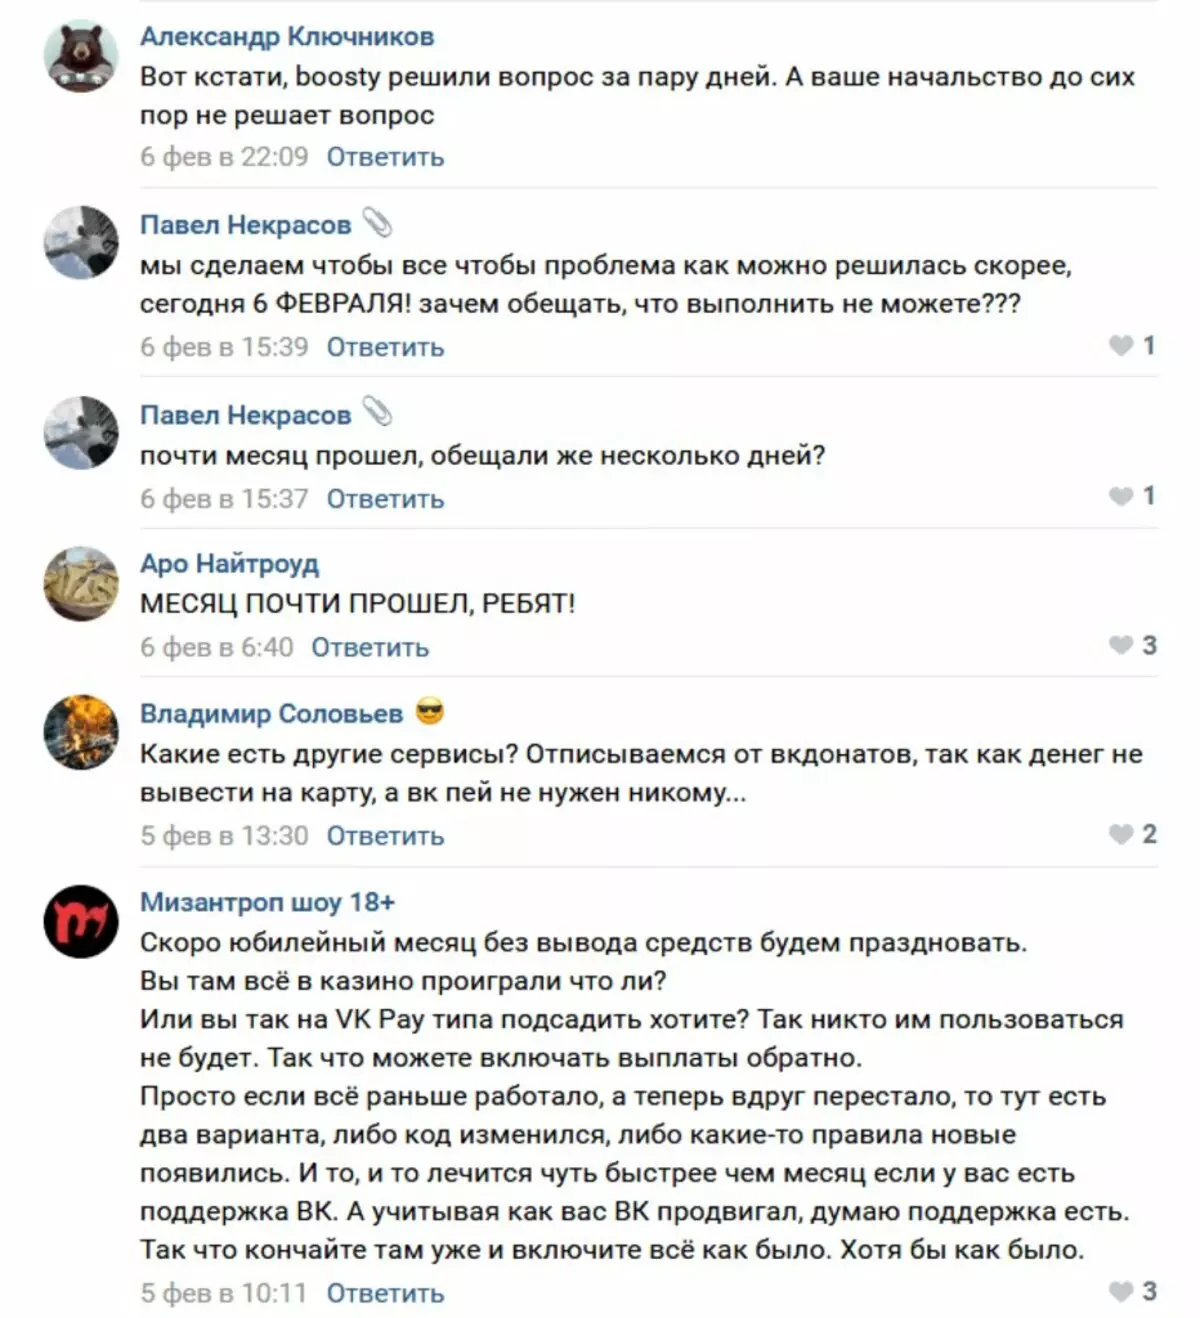 Vkontakte সম্প্রদায়ের প্রায় এক মাস VK ডোনাটের মাধ্যমে প্রাপ্ত গ্রাহকদের কাছ থেকে অর্থ প্রত্যাহার করতে পারে না 3783_2